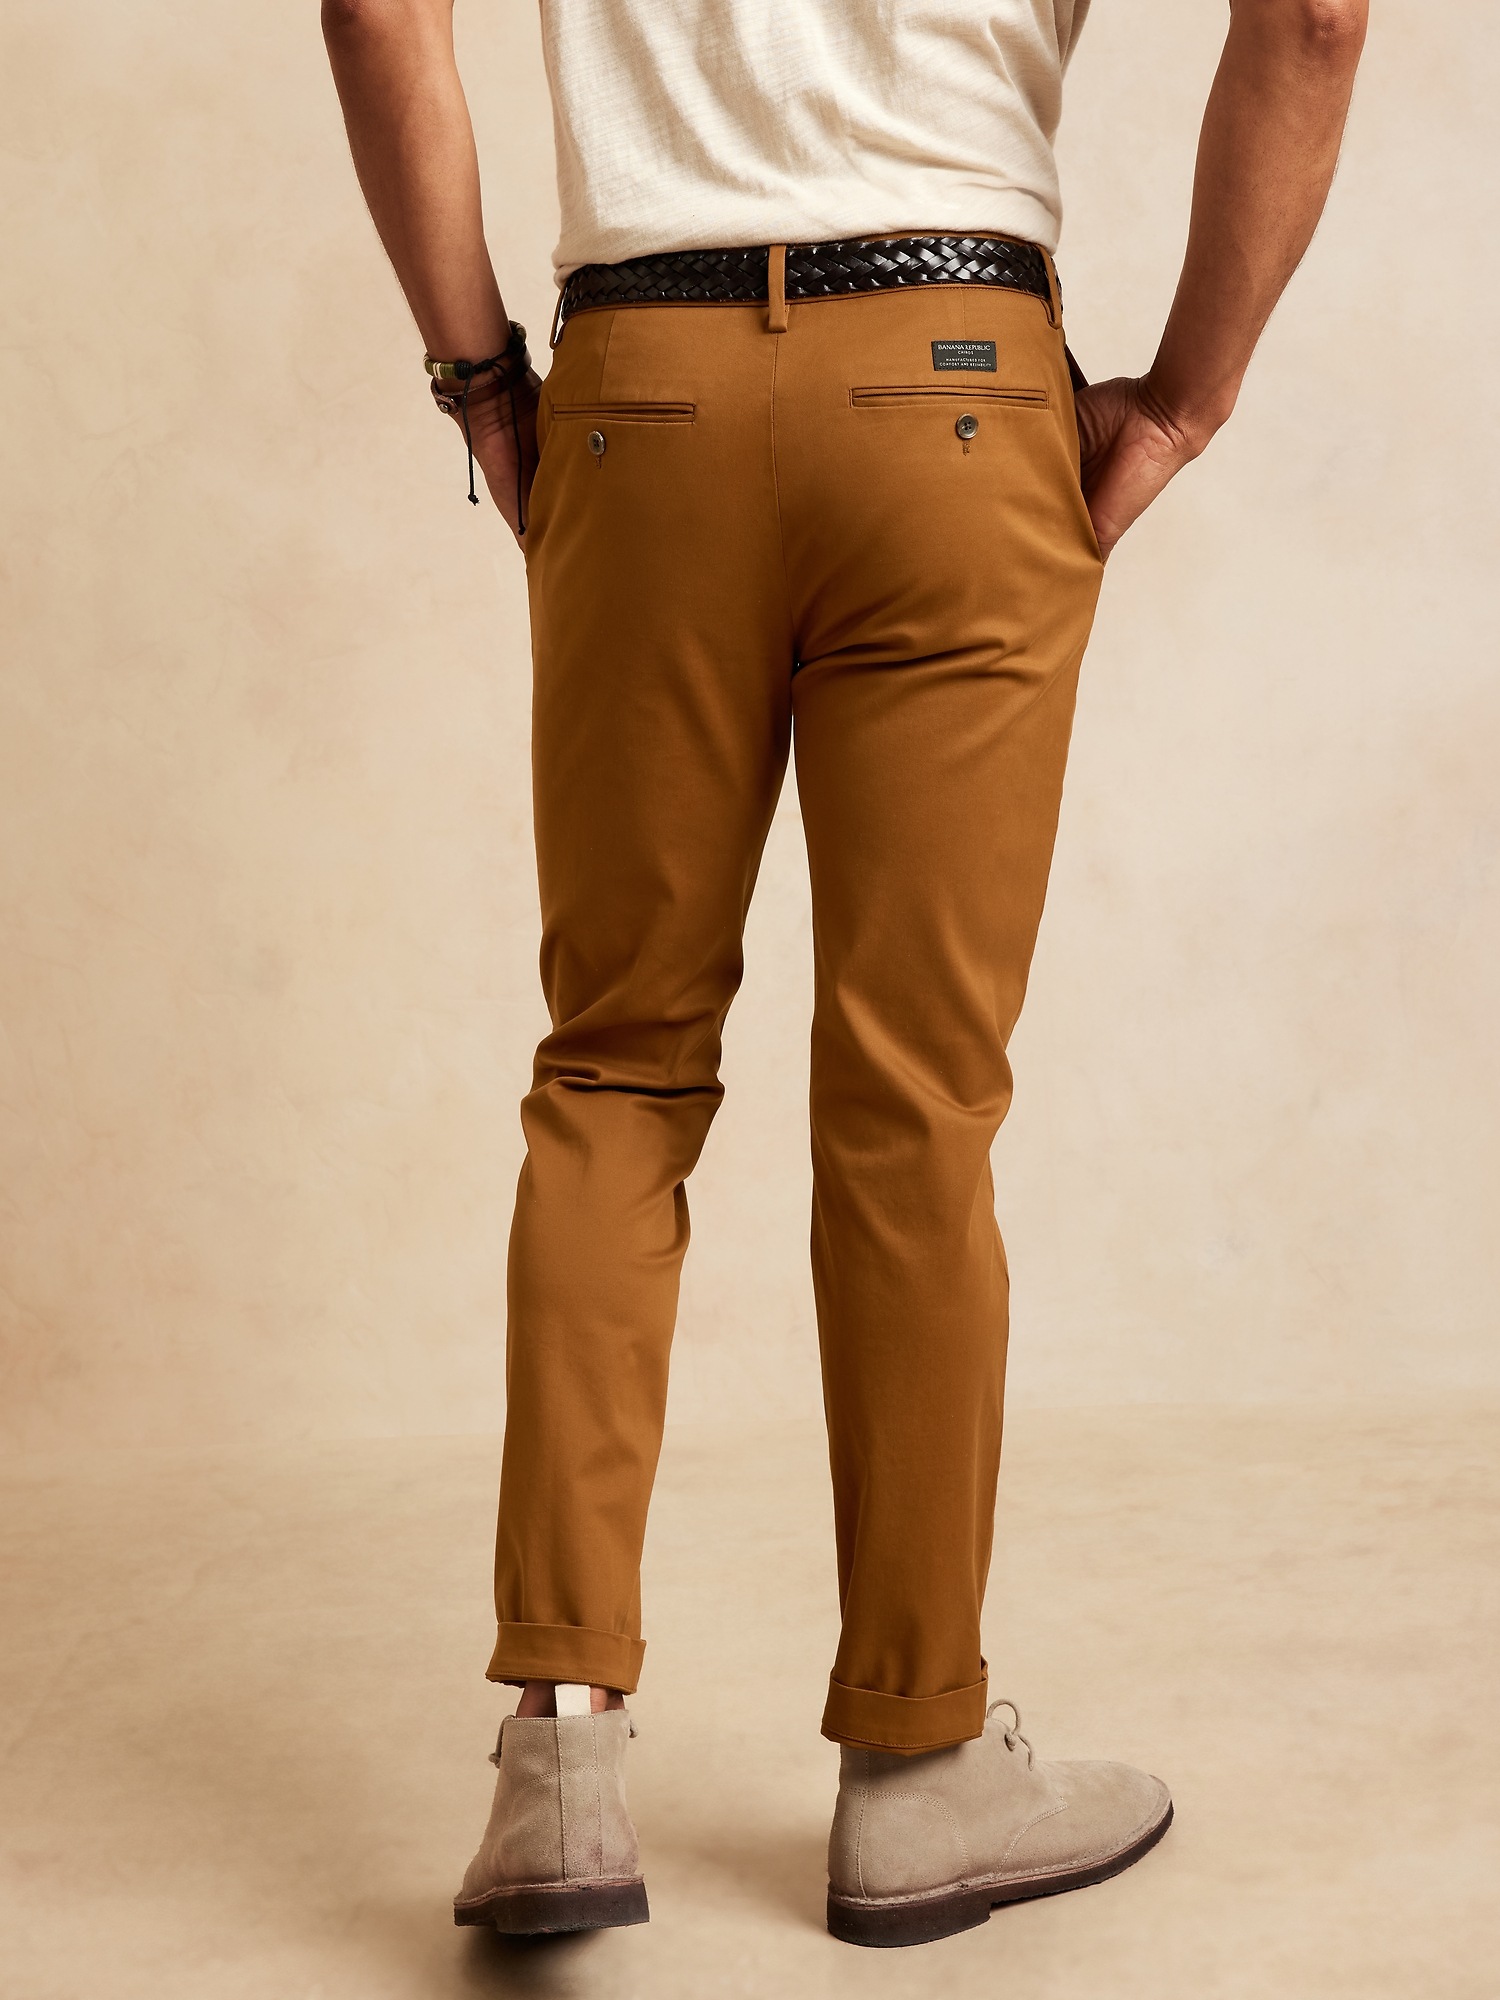 Banana Republic Men's Slim-Fit Wrinkle Resistant Pants 34 x 30 NWT Navy Stretch 